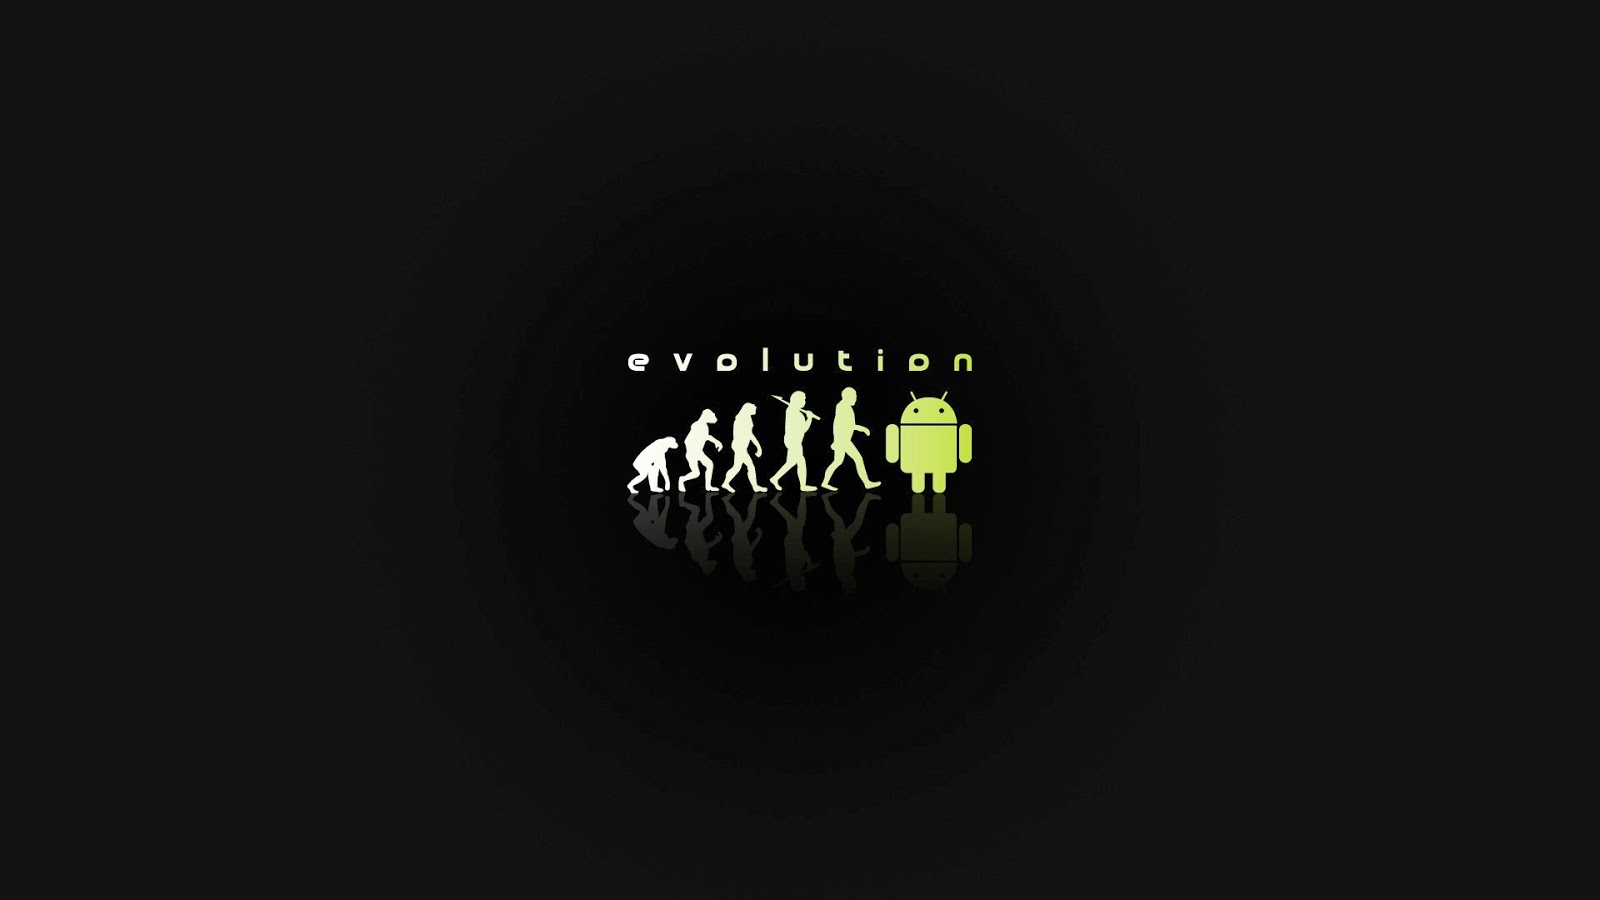  Human Evolution Logo Brand Dark Background Widescreen HD Wallpaper v9